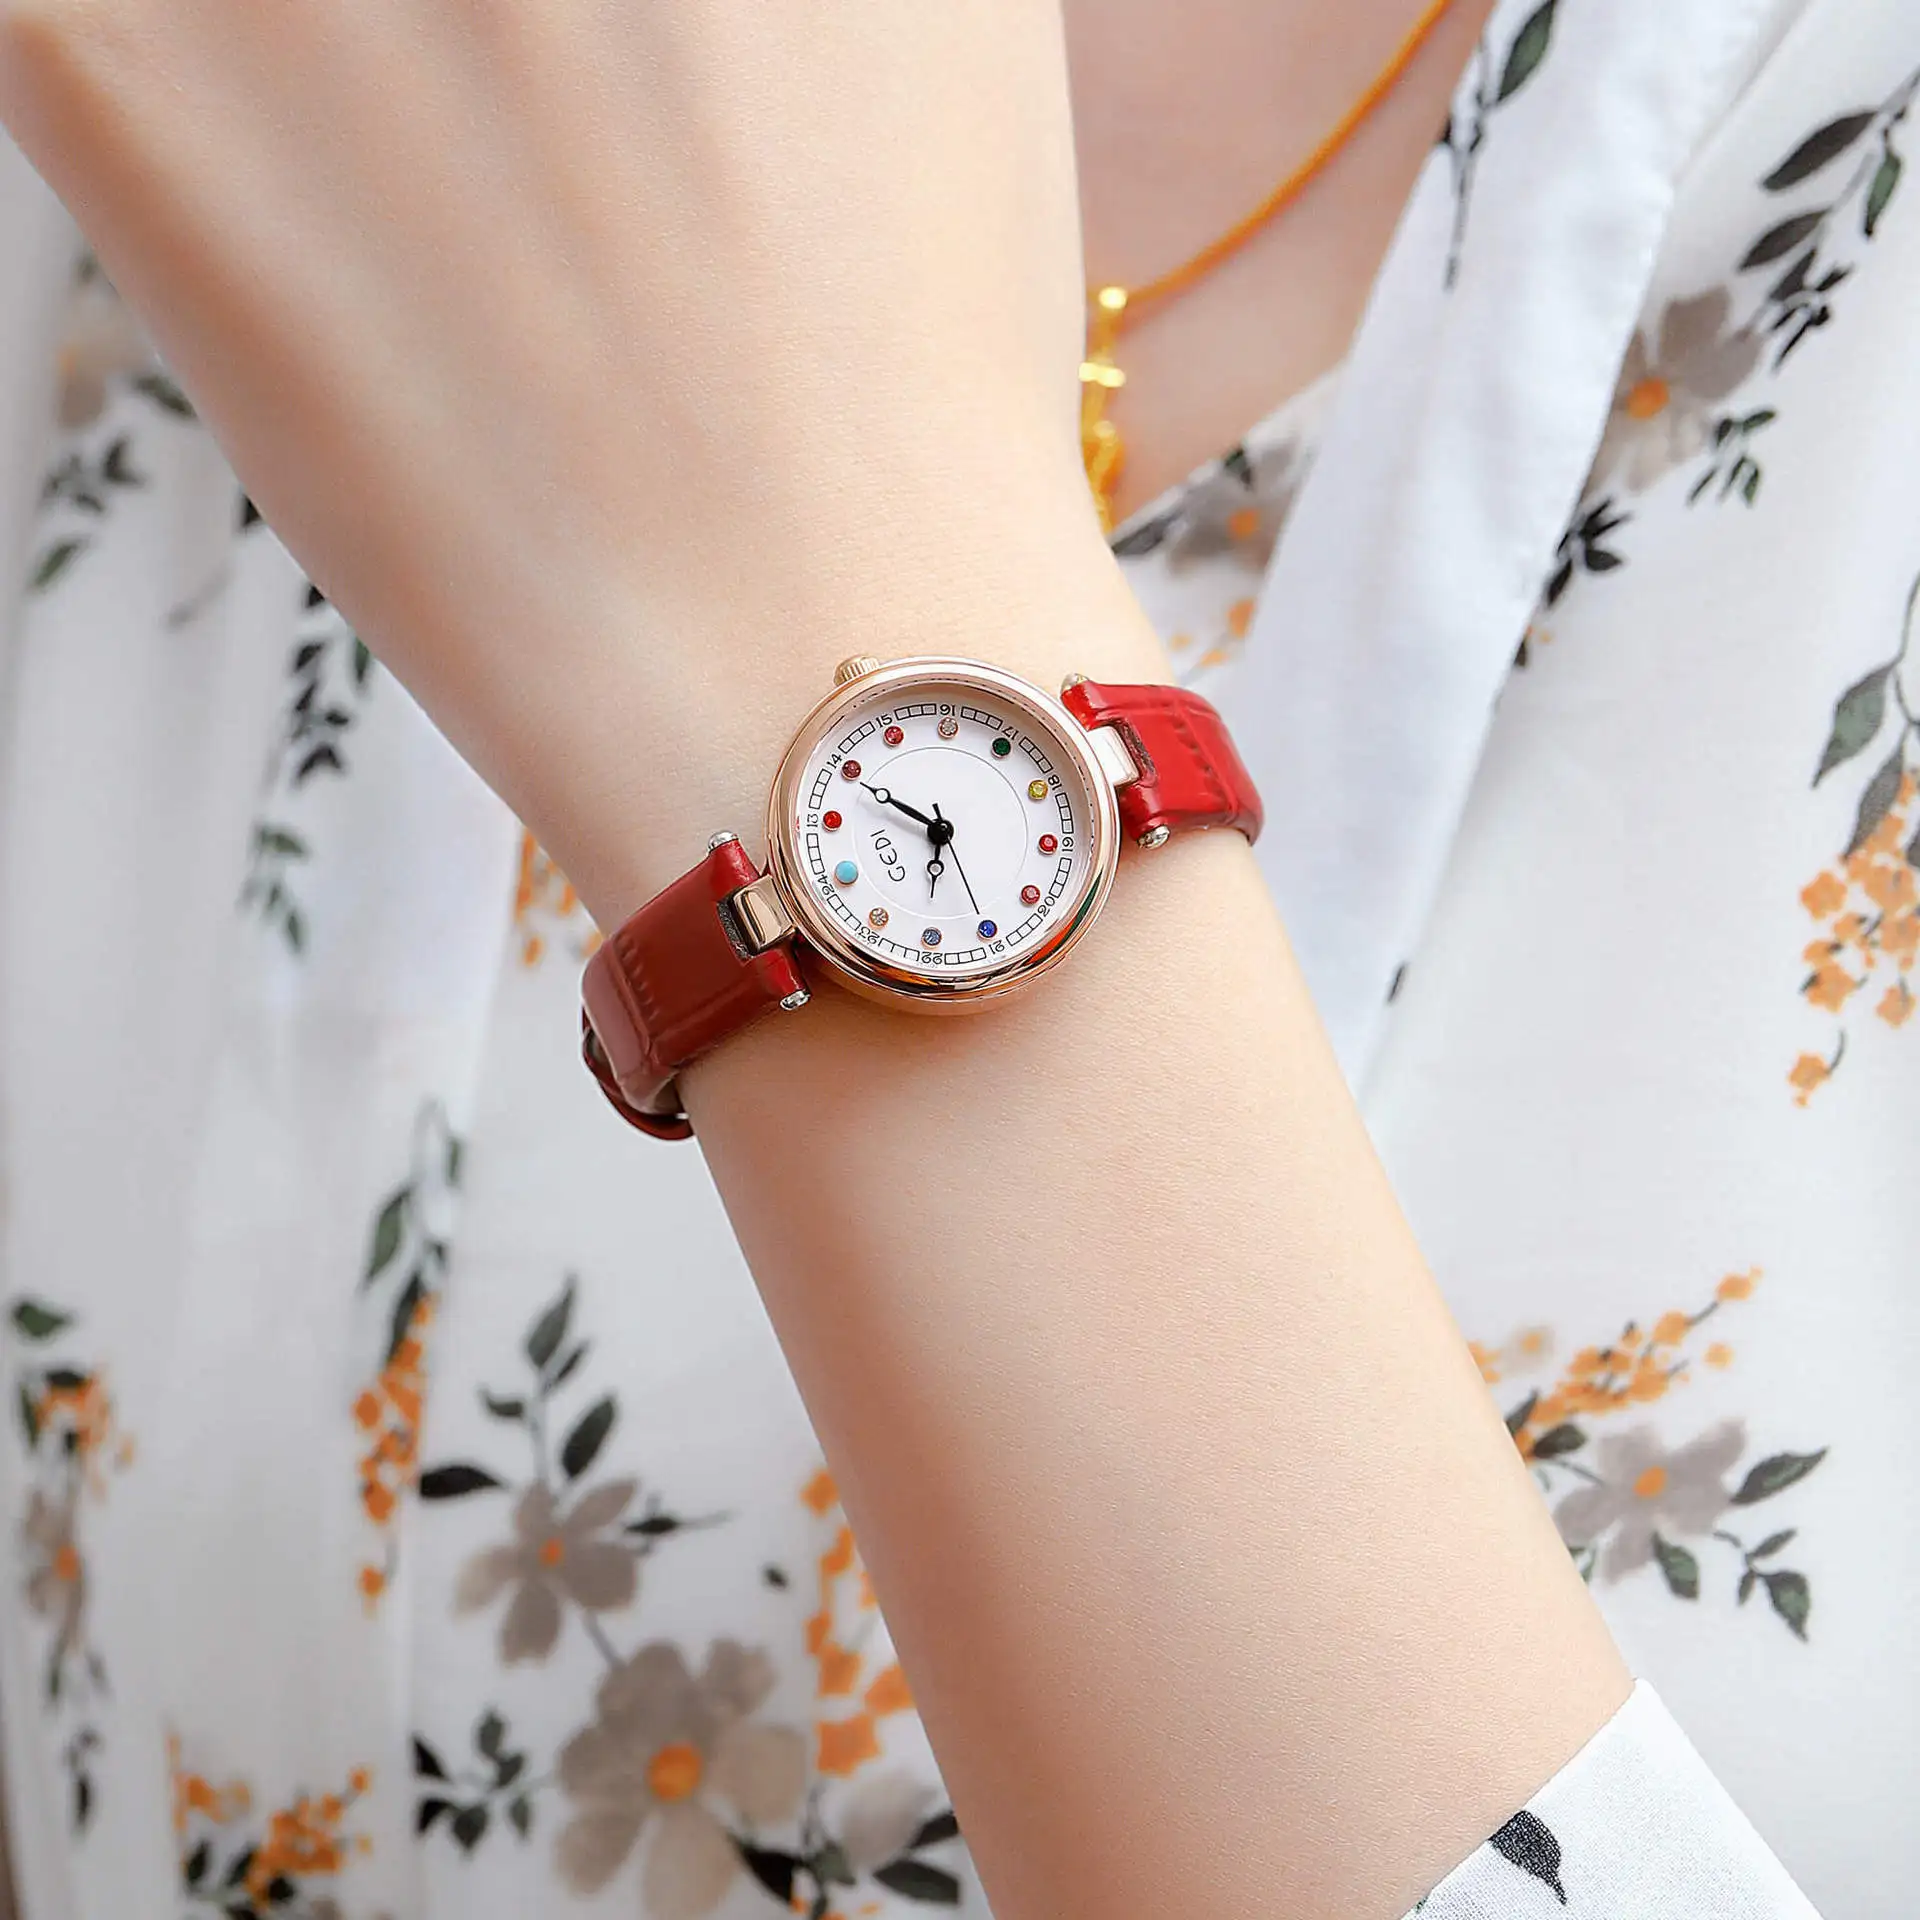 Mini Design Women Watches Retro Leather Colorful Crystal Female Clock Fashion Exquisite Waterproof Quartz Ladies Watch masculino enlarge